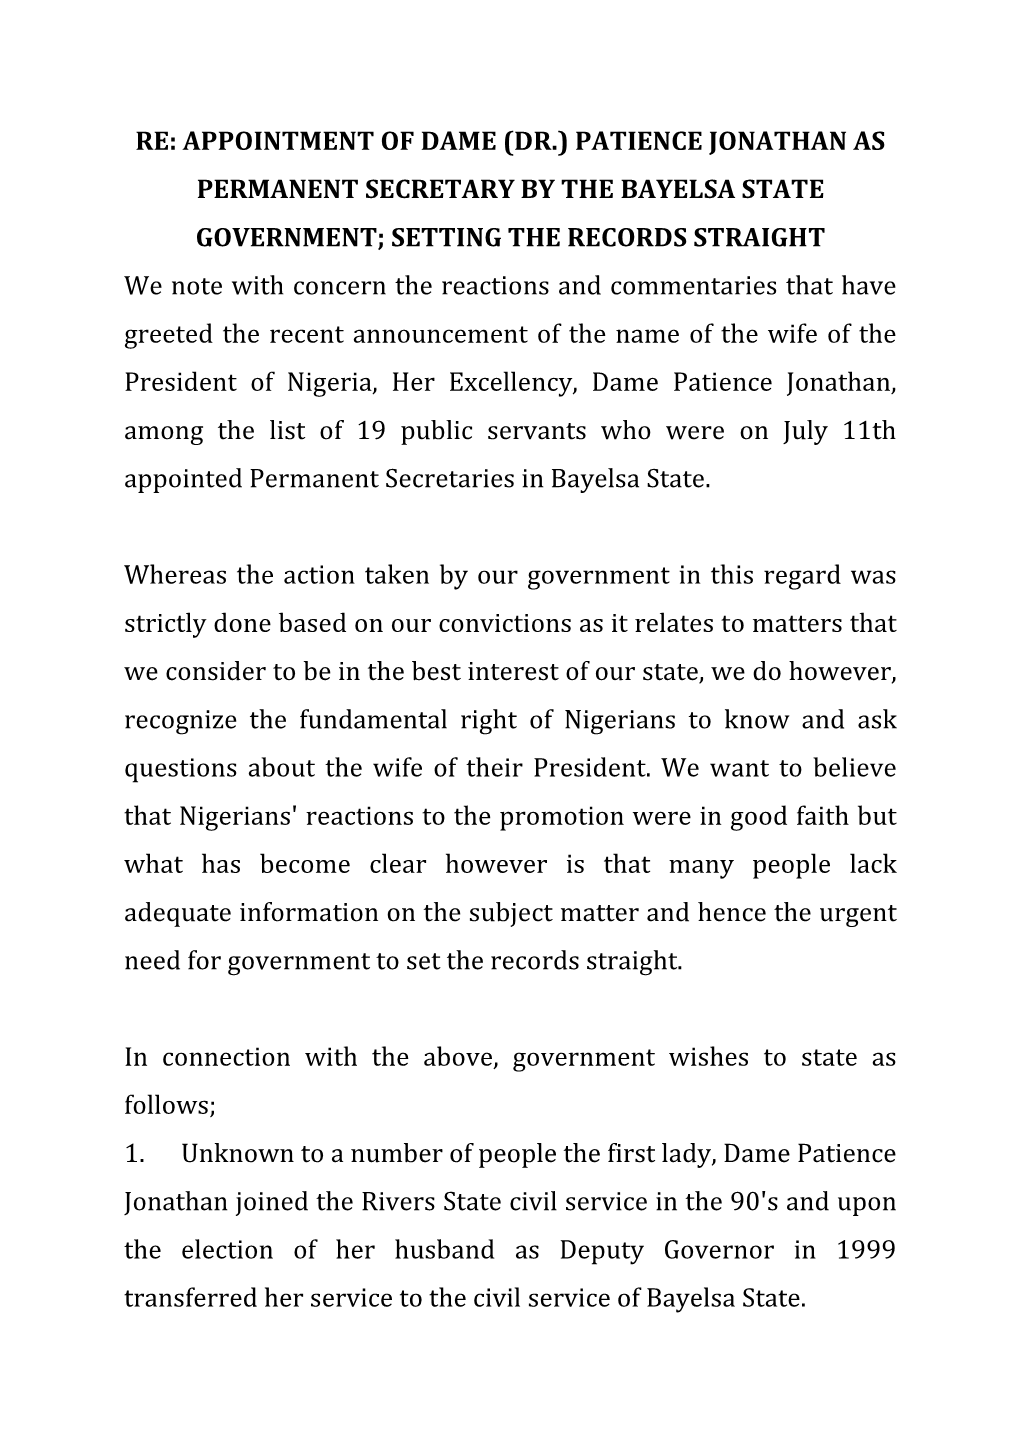 Bayelsa Government Press Statement